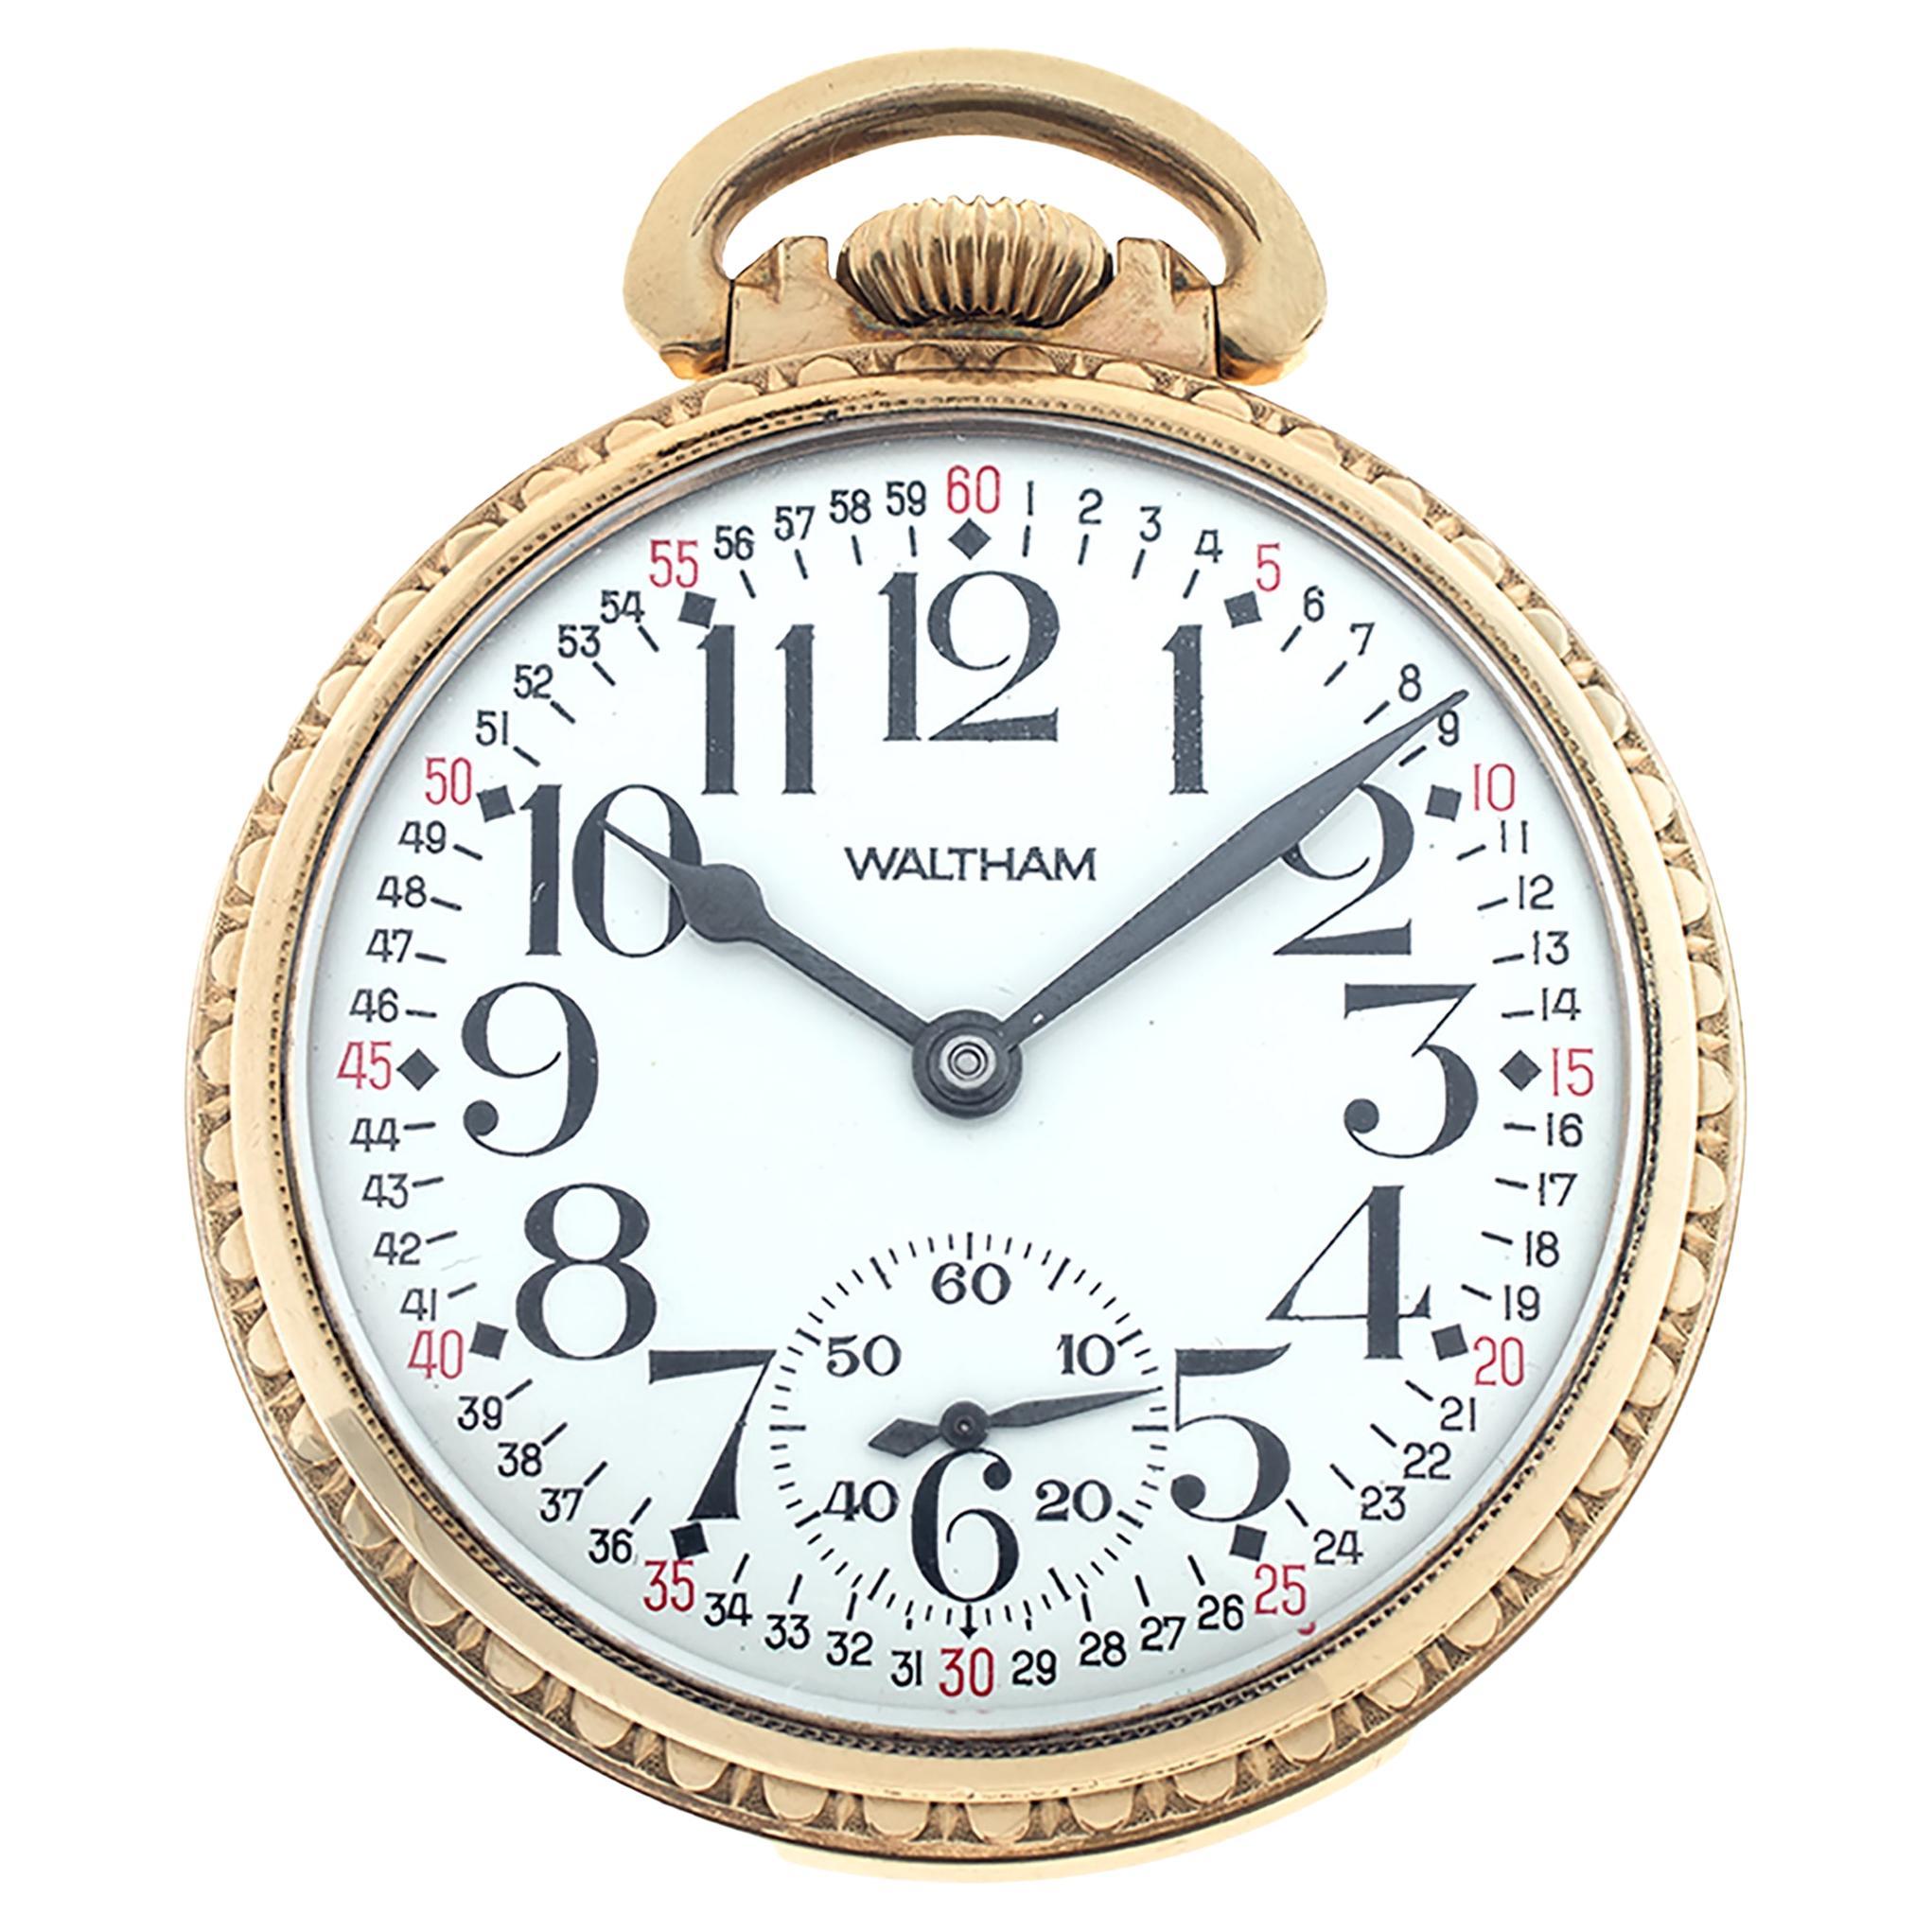 Waltham Vanguard 10k Rolled Gold Pocket Watch